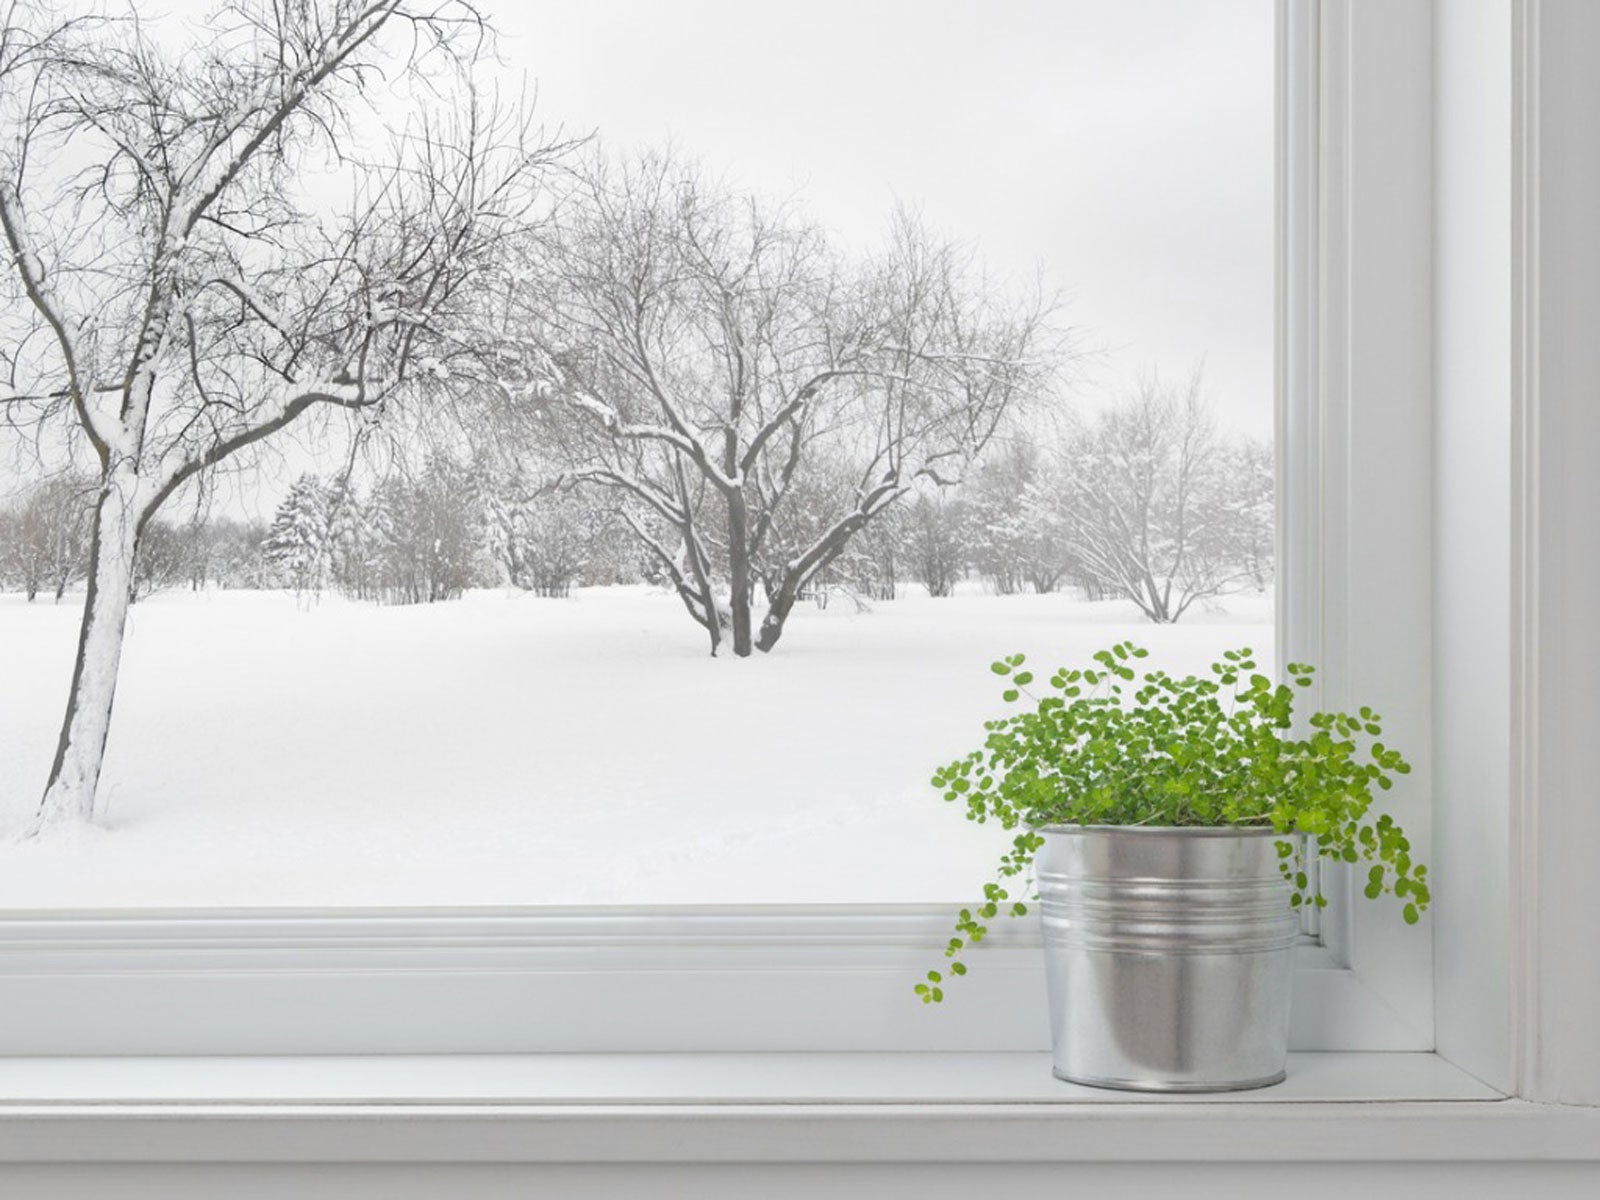 Winter Gardening Indoors – How To Grow Food Inside During Winter